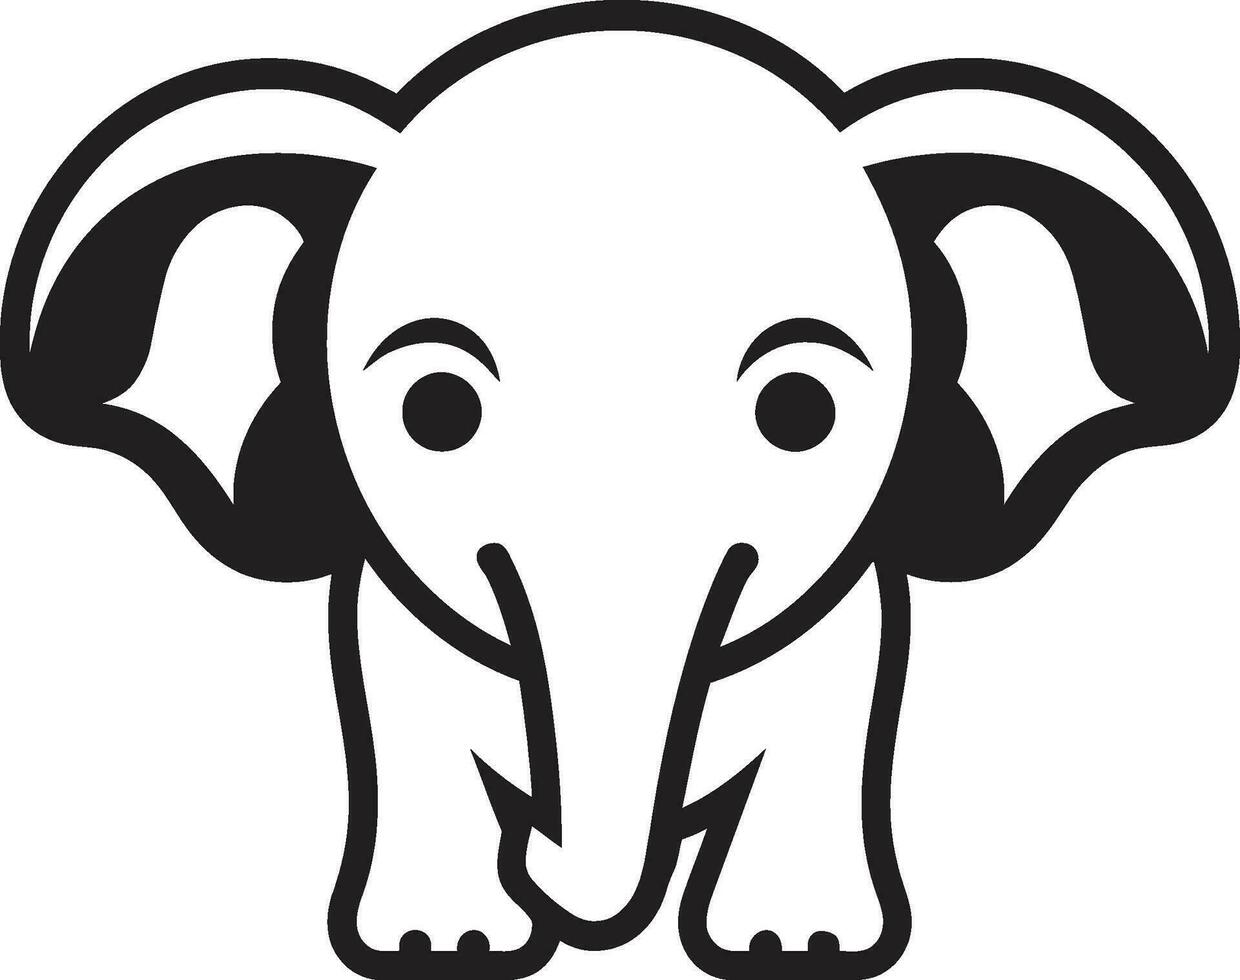 elefante vector logo icono para un marca vas a amor elefante vector logo icono para un marca usted lata confiar